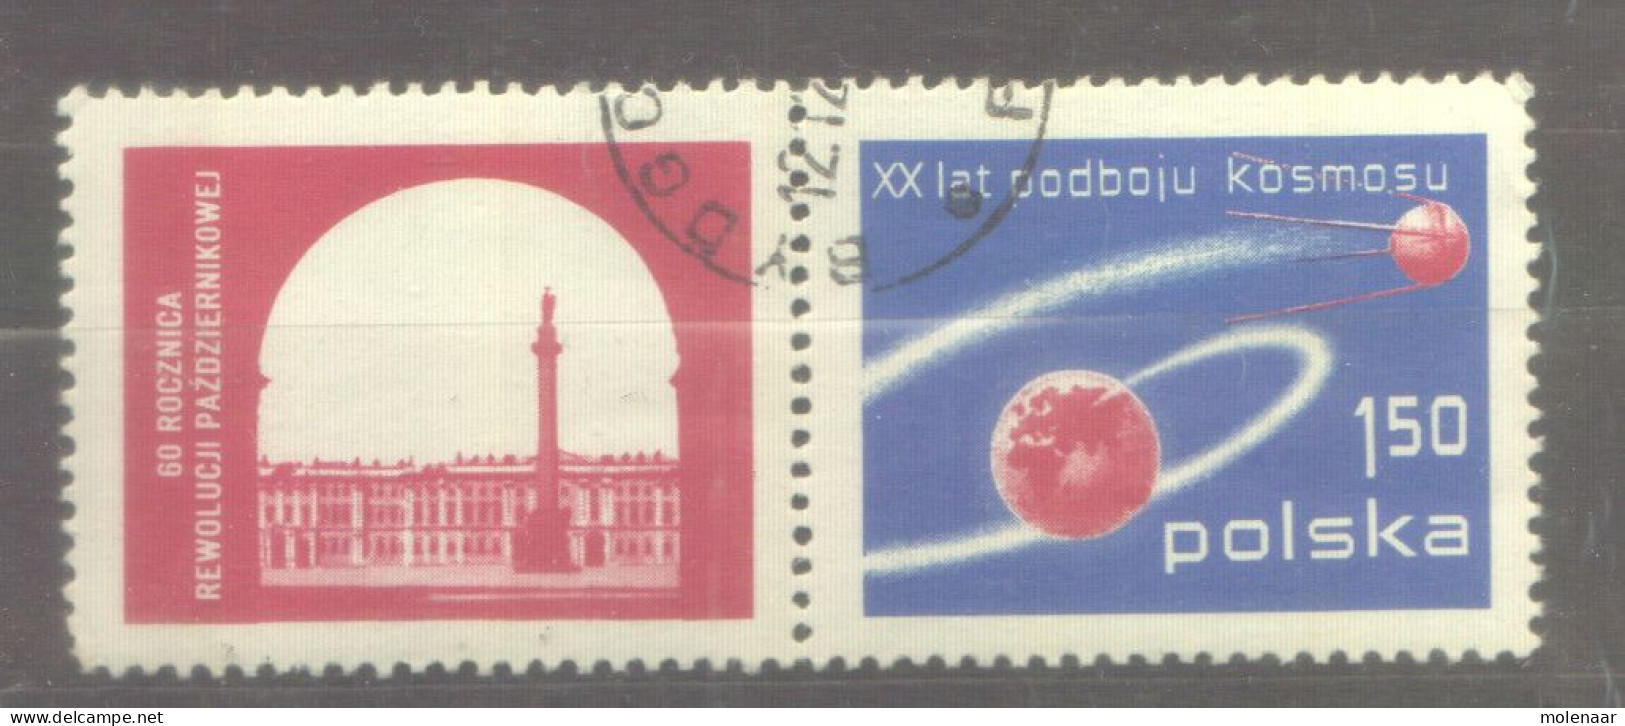 Postzegels > Europa > Polen > 1944-.... Republiek > 1971-80 > Gebruikt No. 2521 (24150) - Gebraucht